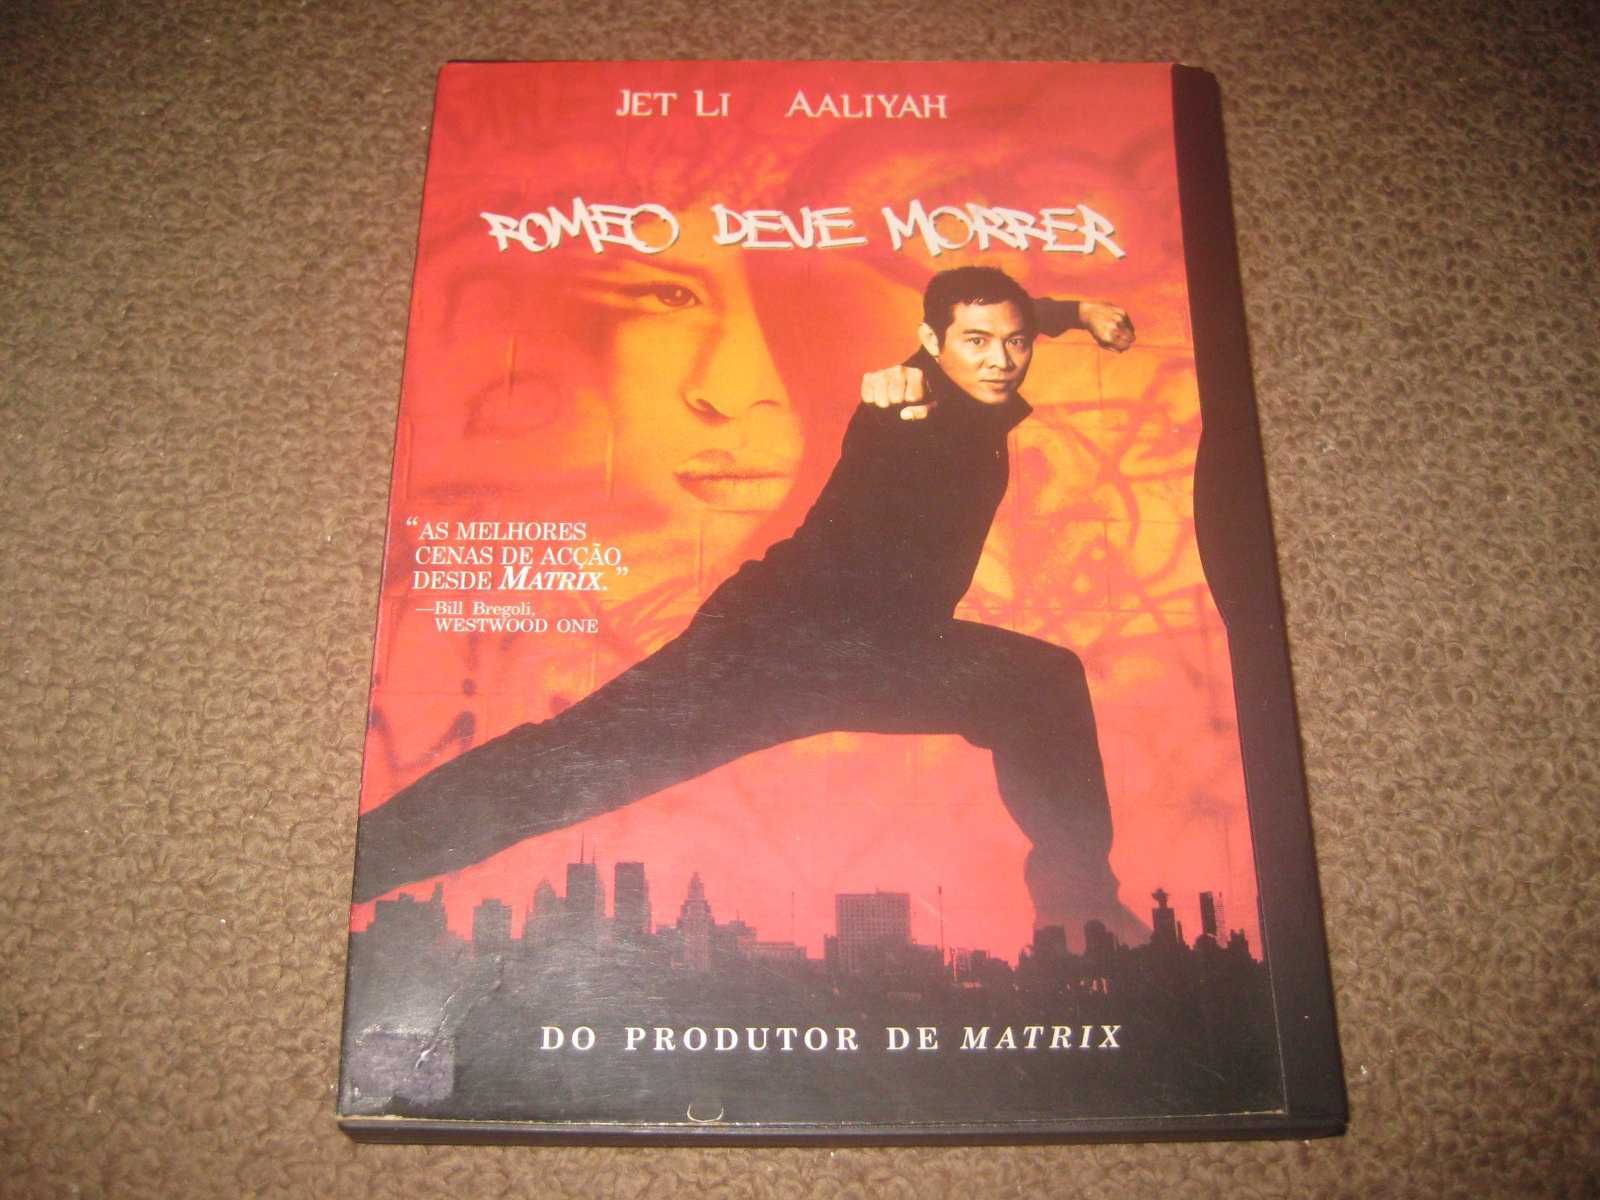 DVD "Romeo Deve Morrer" com Jet Li/Snapper!